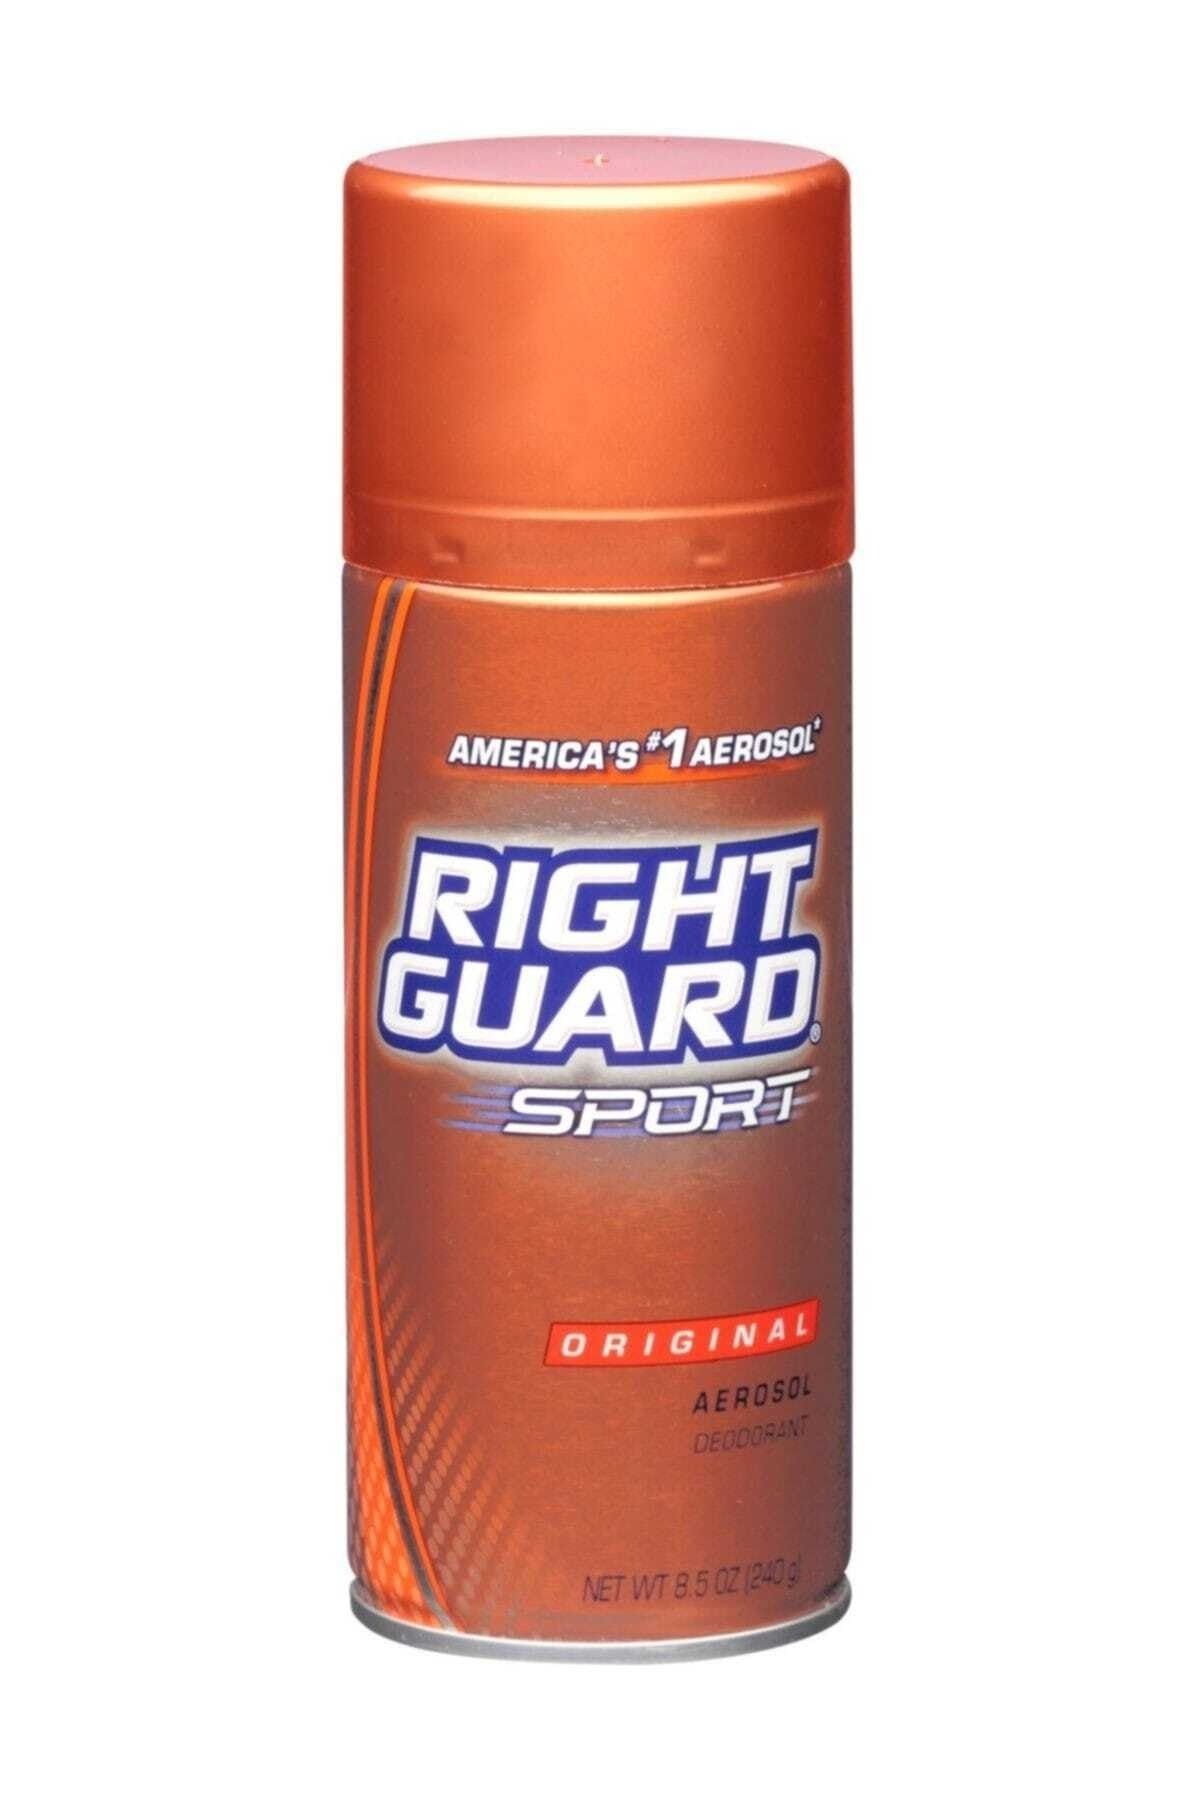 Right Guard Sport Original Aerosol Deodorant 17000068114